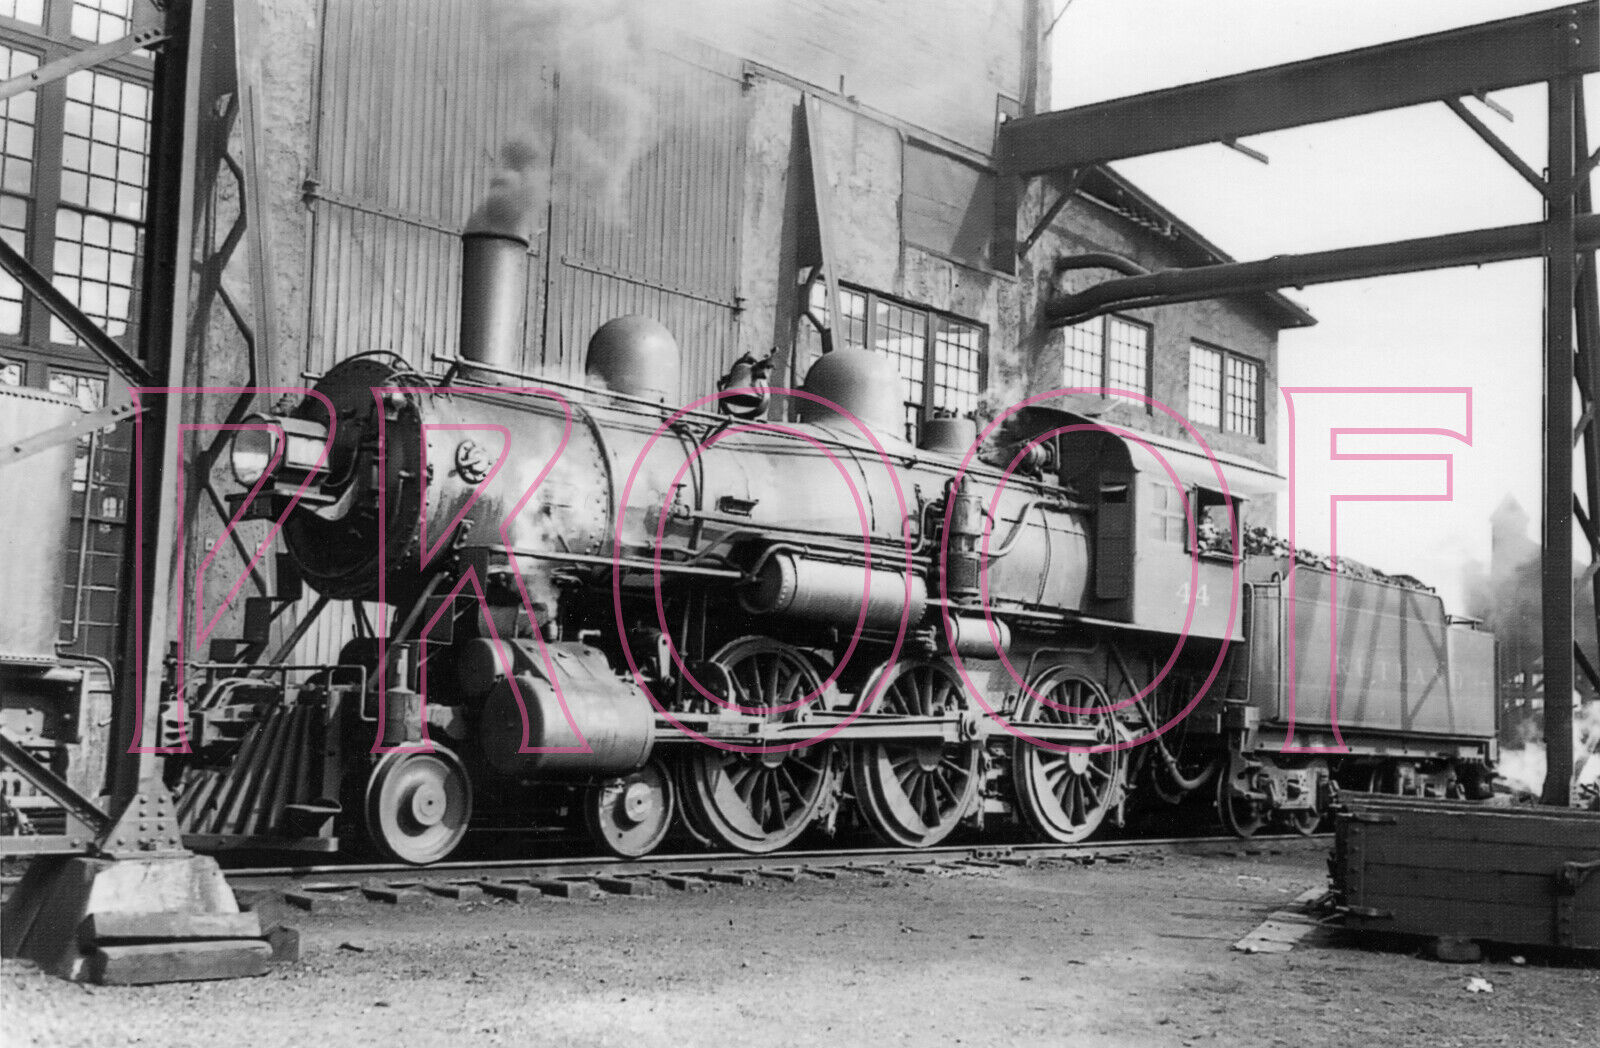 Rutland Railroad Engine 44 at Rutland, VT in 1930 - 8x10 Photo